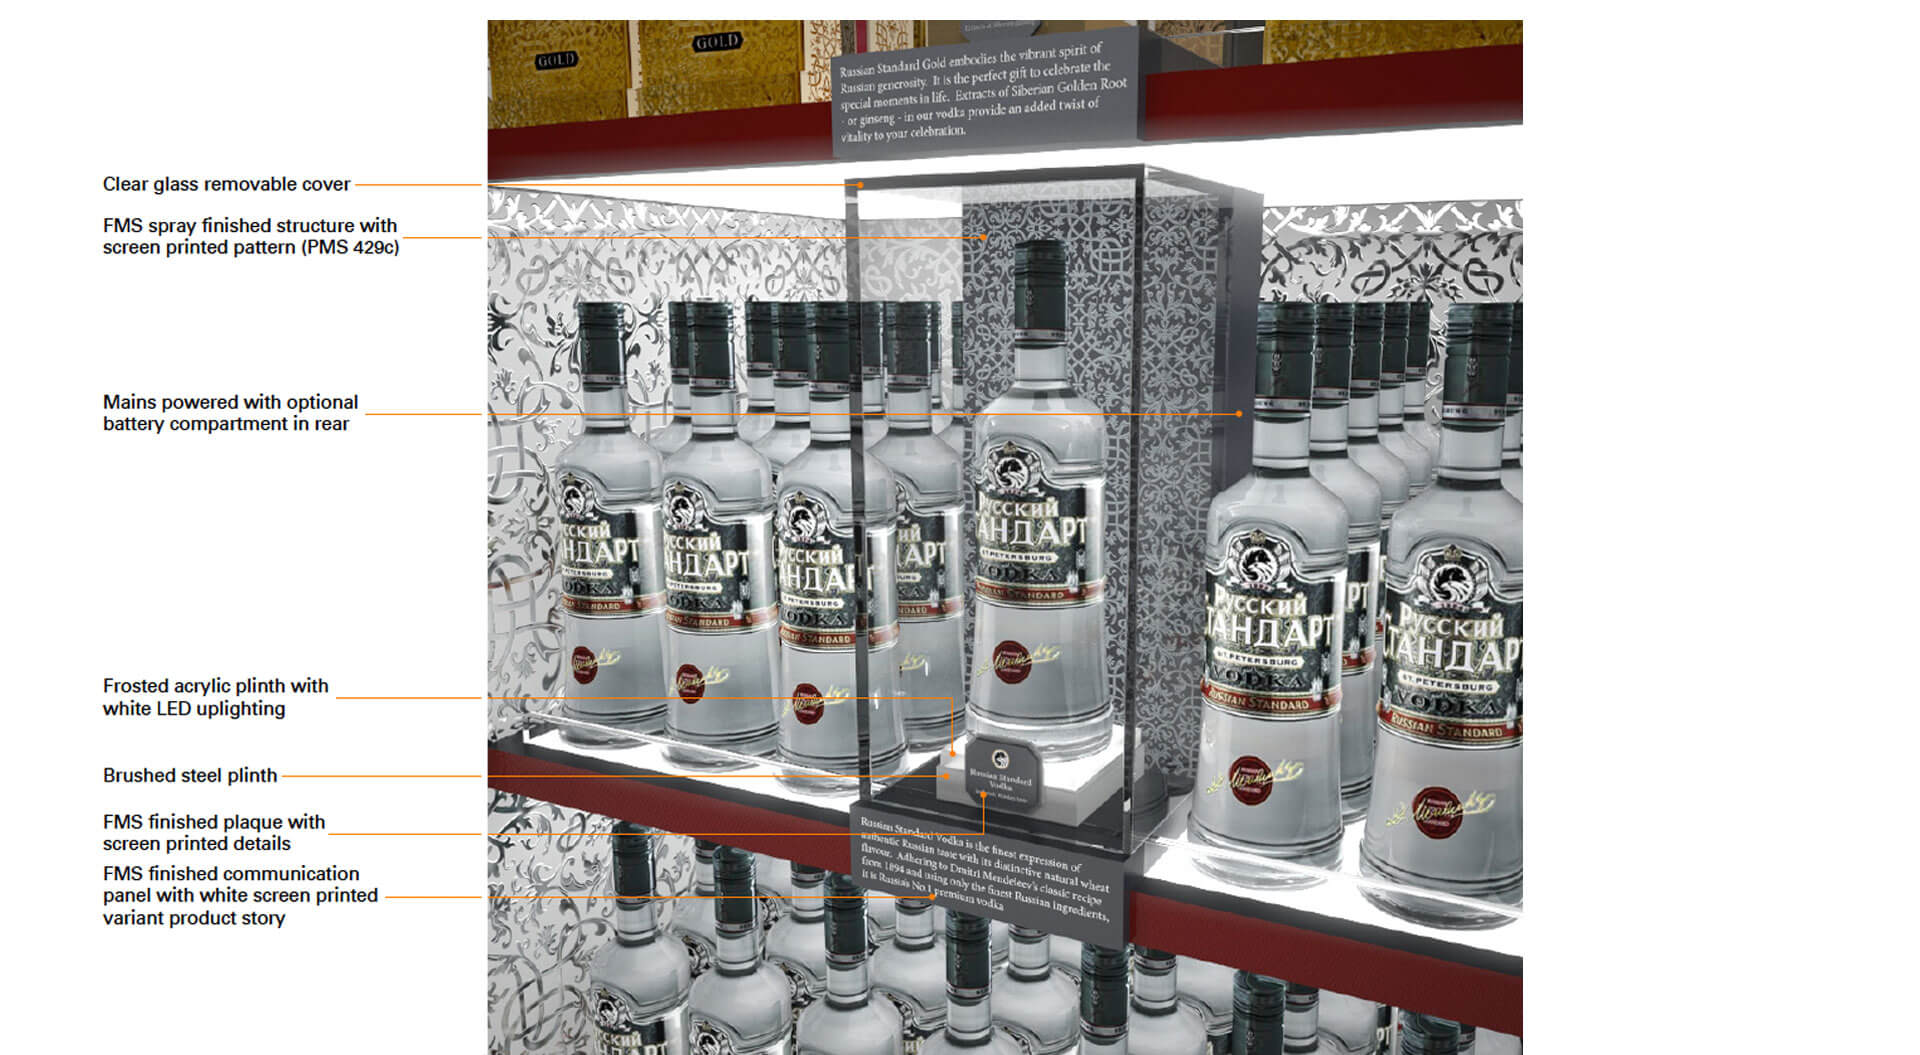 Russian Standard Vodka promotion travel retail, marketing, merchandising design, airports, duty-free alcohol